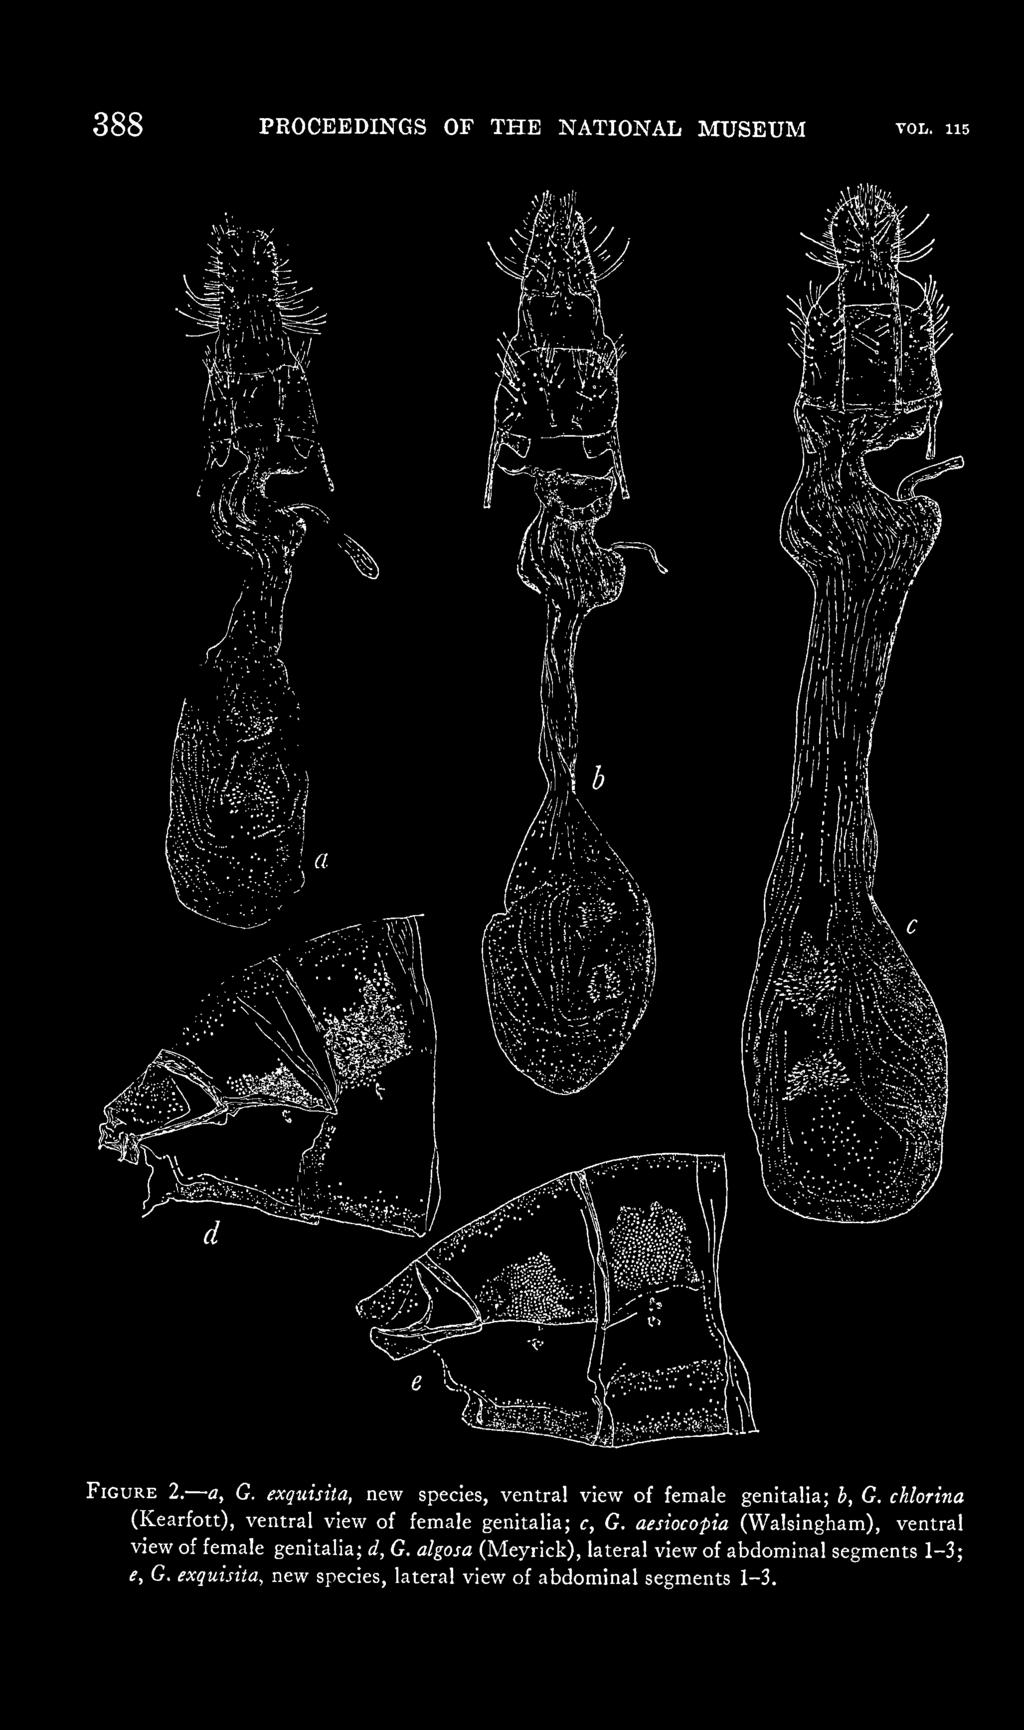 d, G. algosa (Meyrick), lateral view of abdominal segments